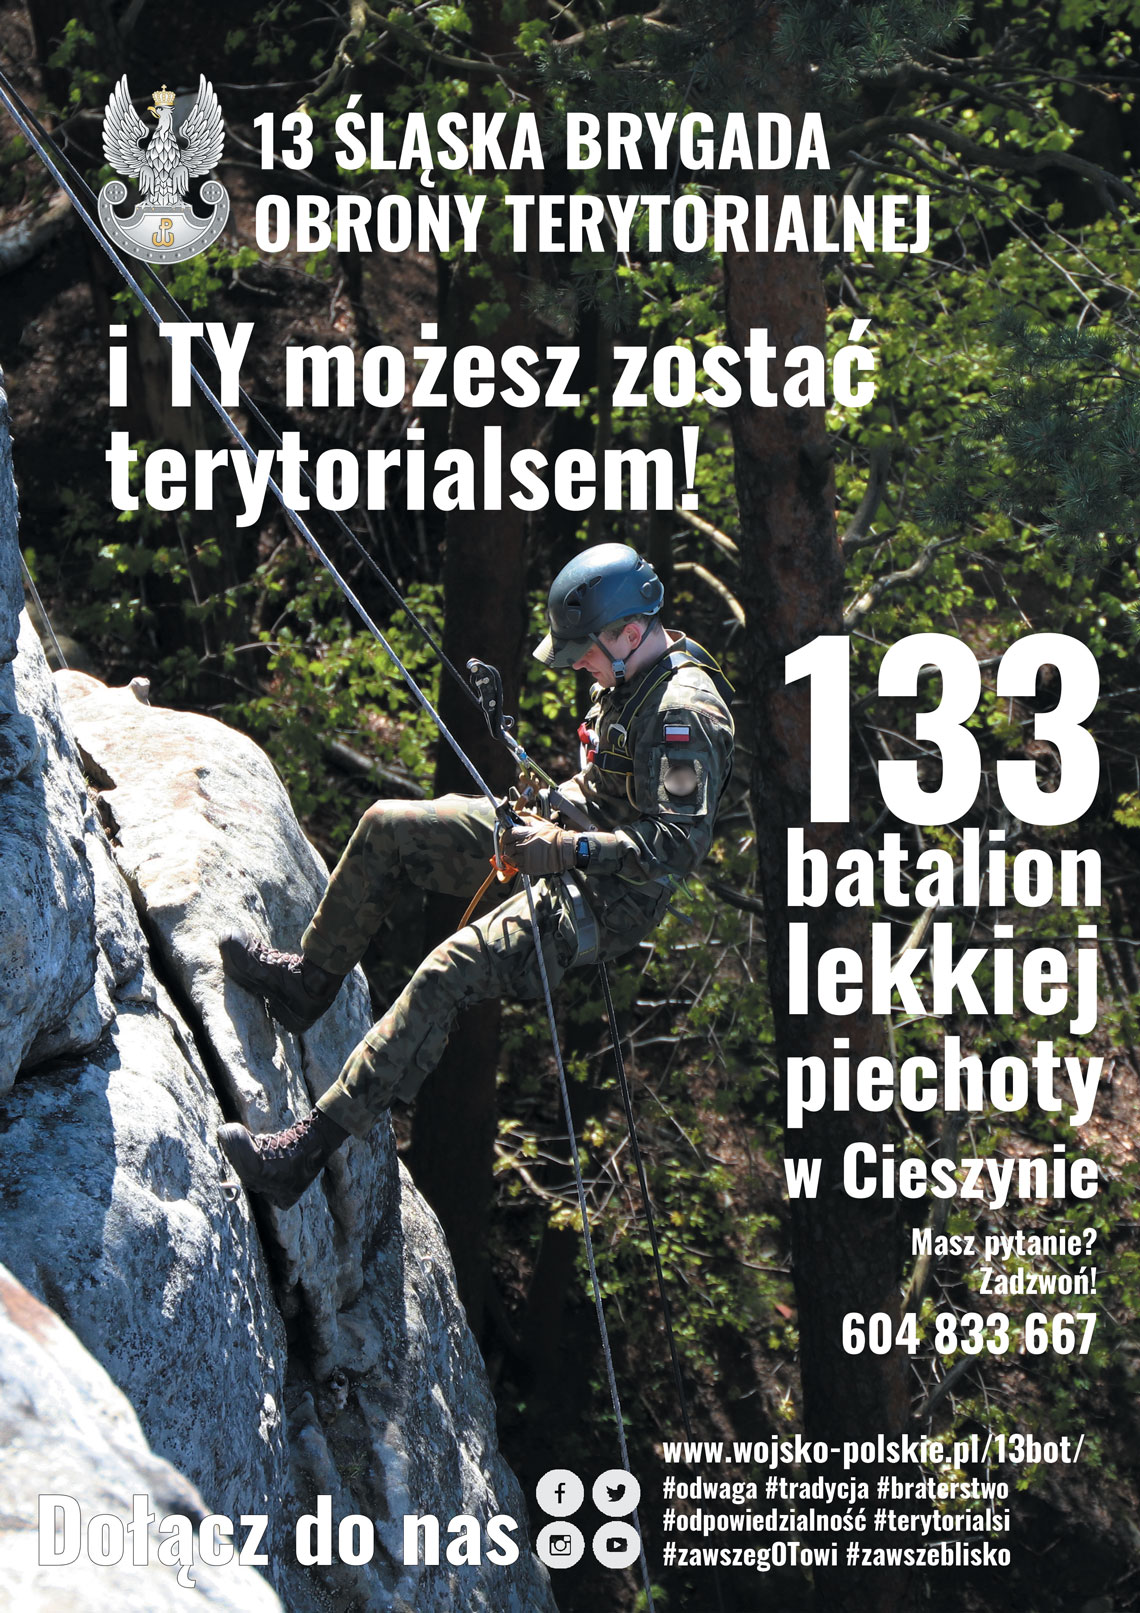 Nabór do 13 Śląskiej Brygady Obrony Terytorialnej